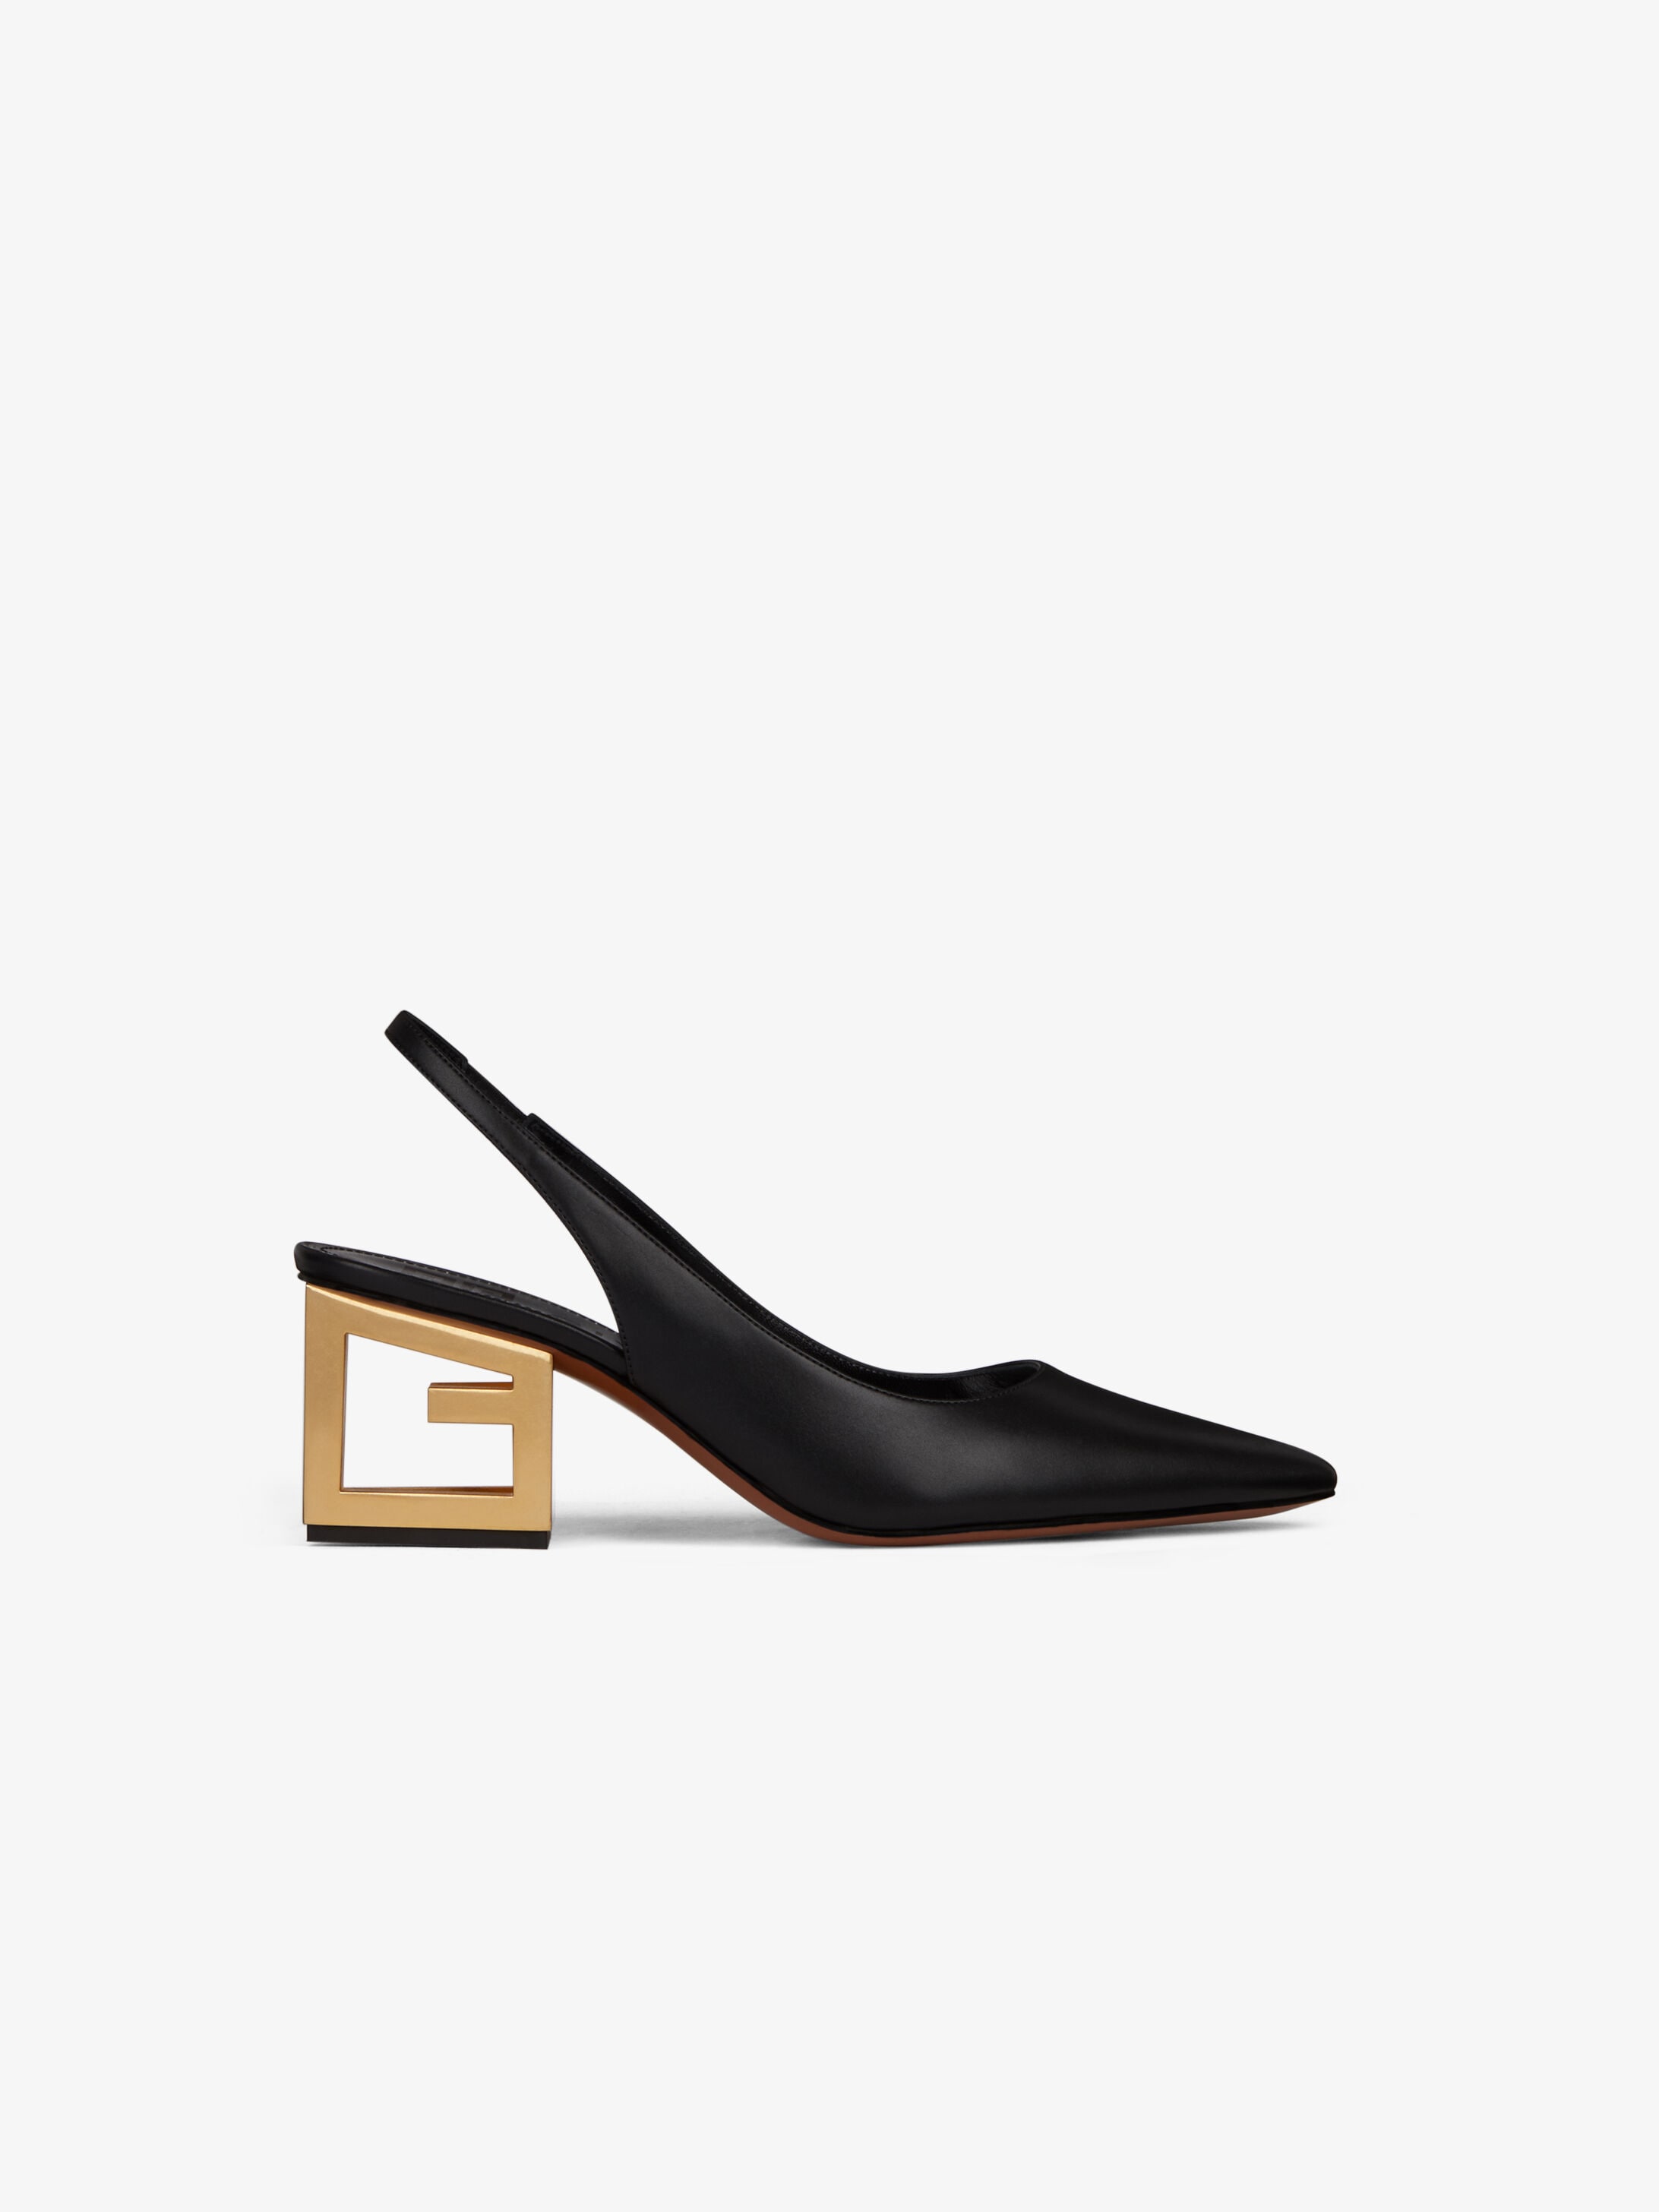 triangular G heel | GIVENCHY Paris